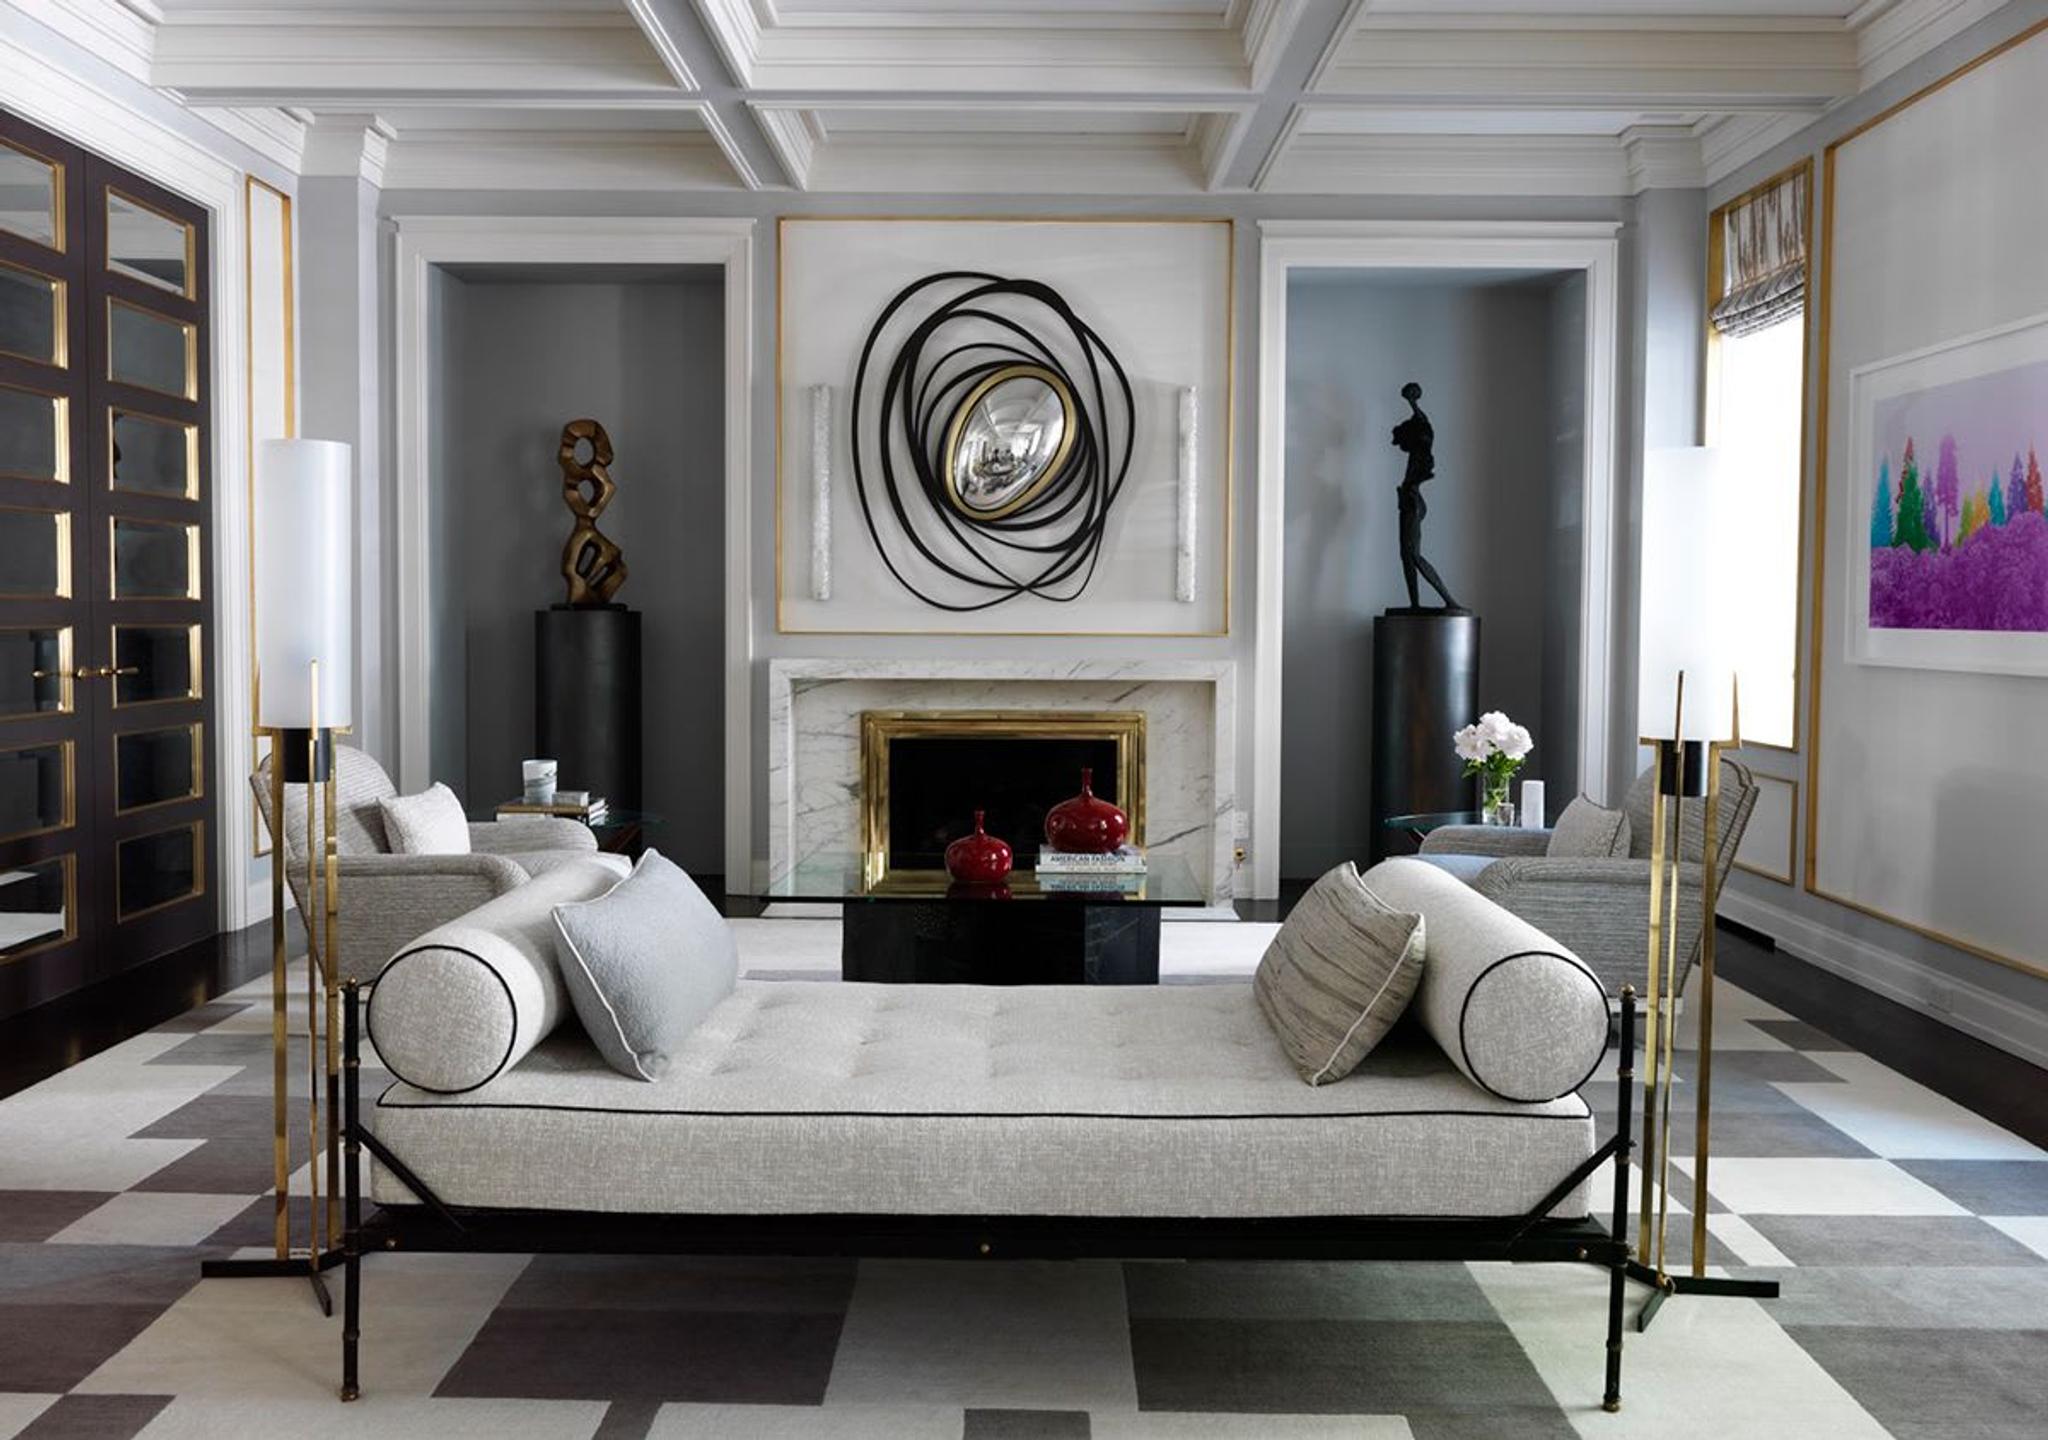 5th Avenue New York apartment living room by Jean-Louis Deniot. Photo by Jonny Valiant